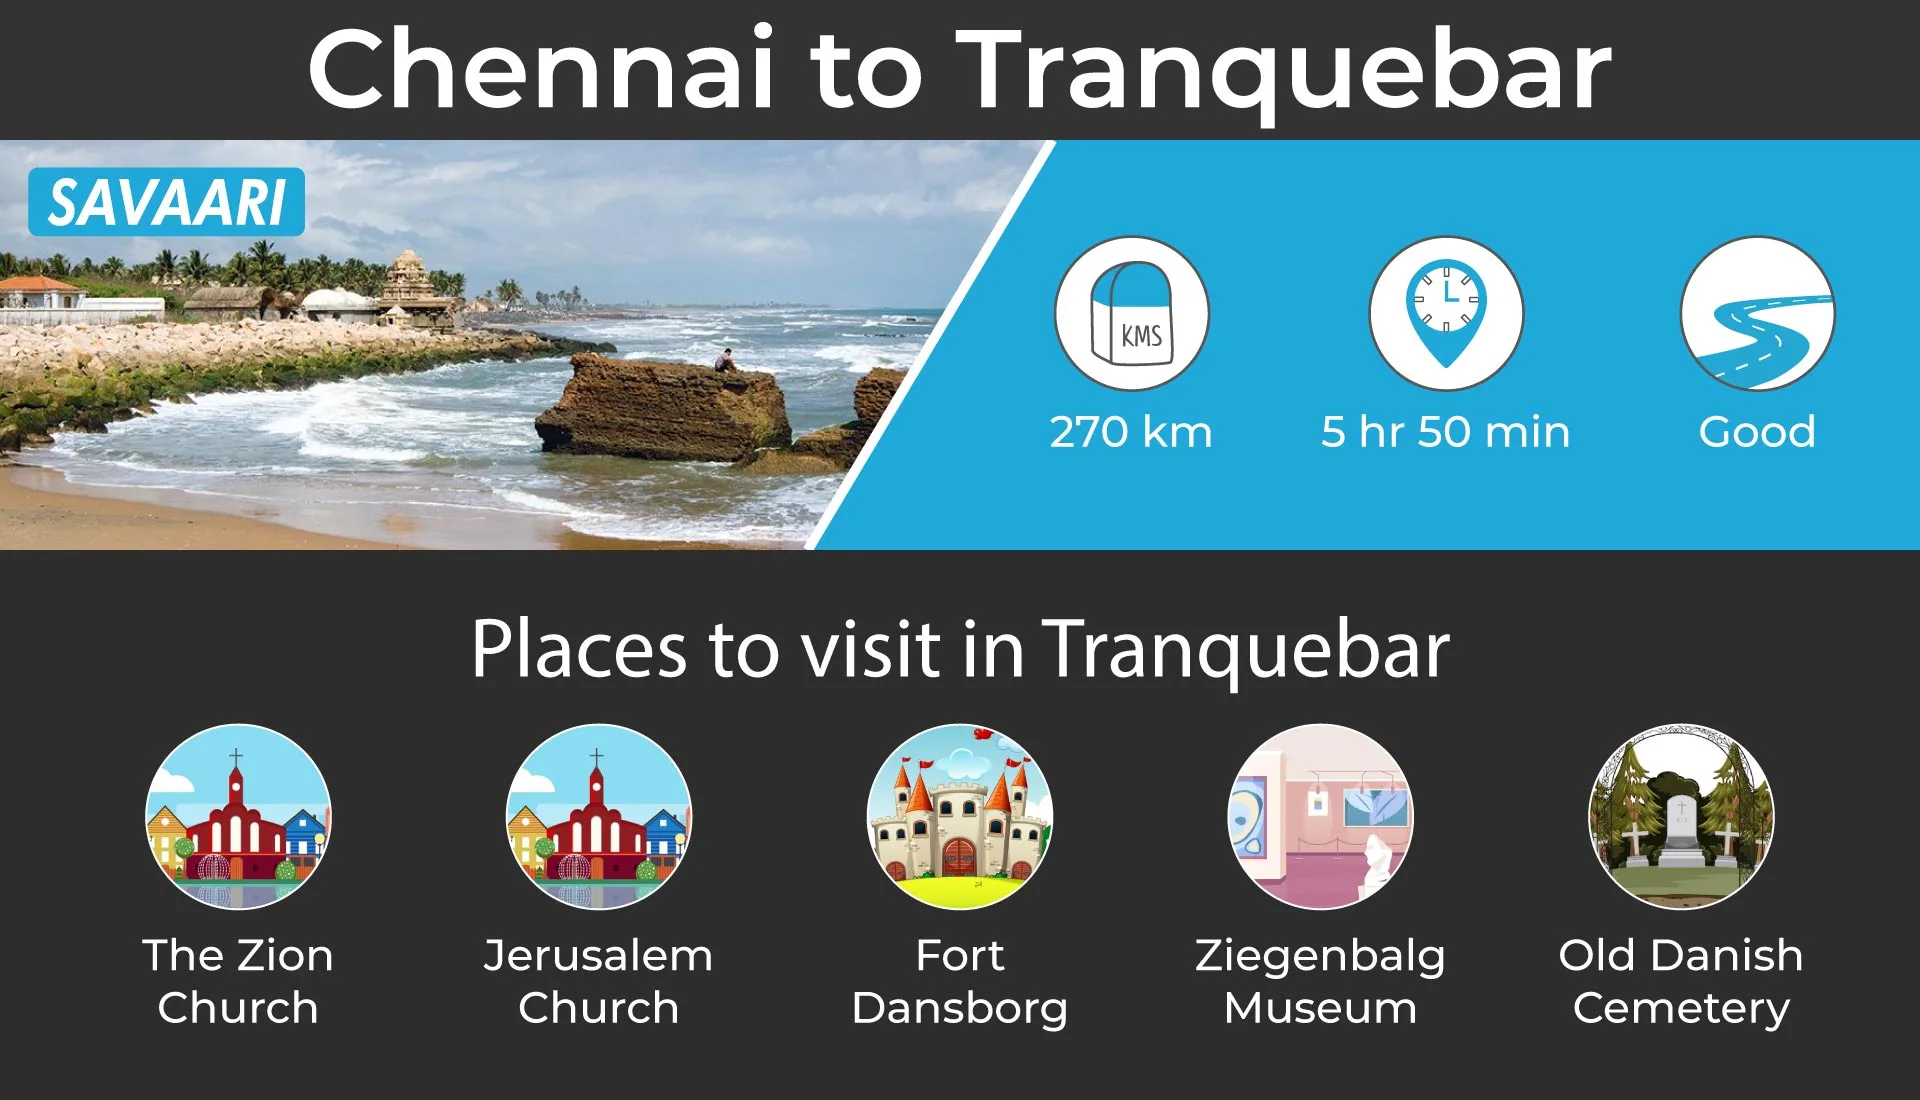 Chennai to Tranquebar coastal road trip